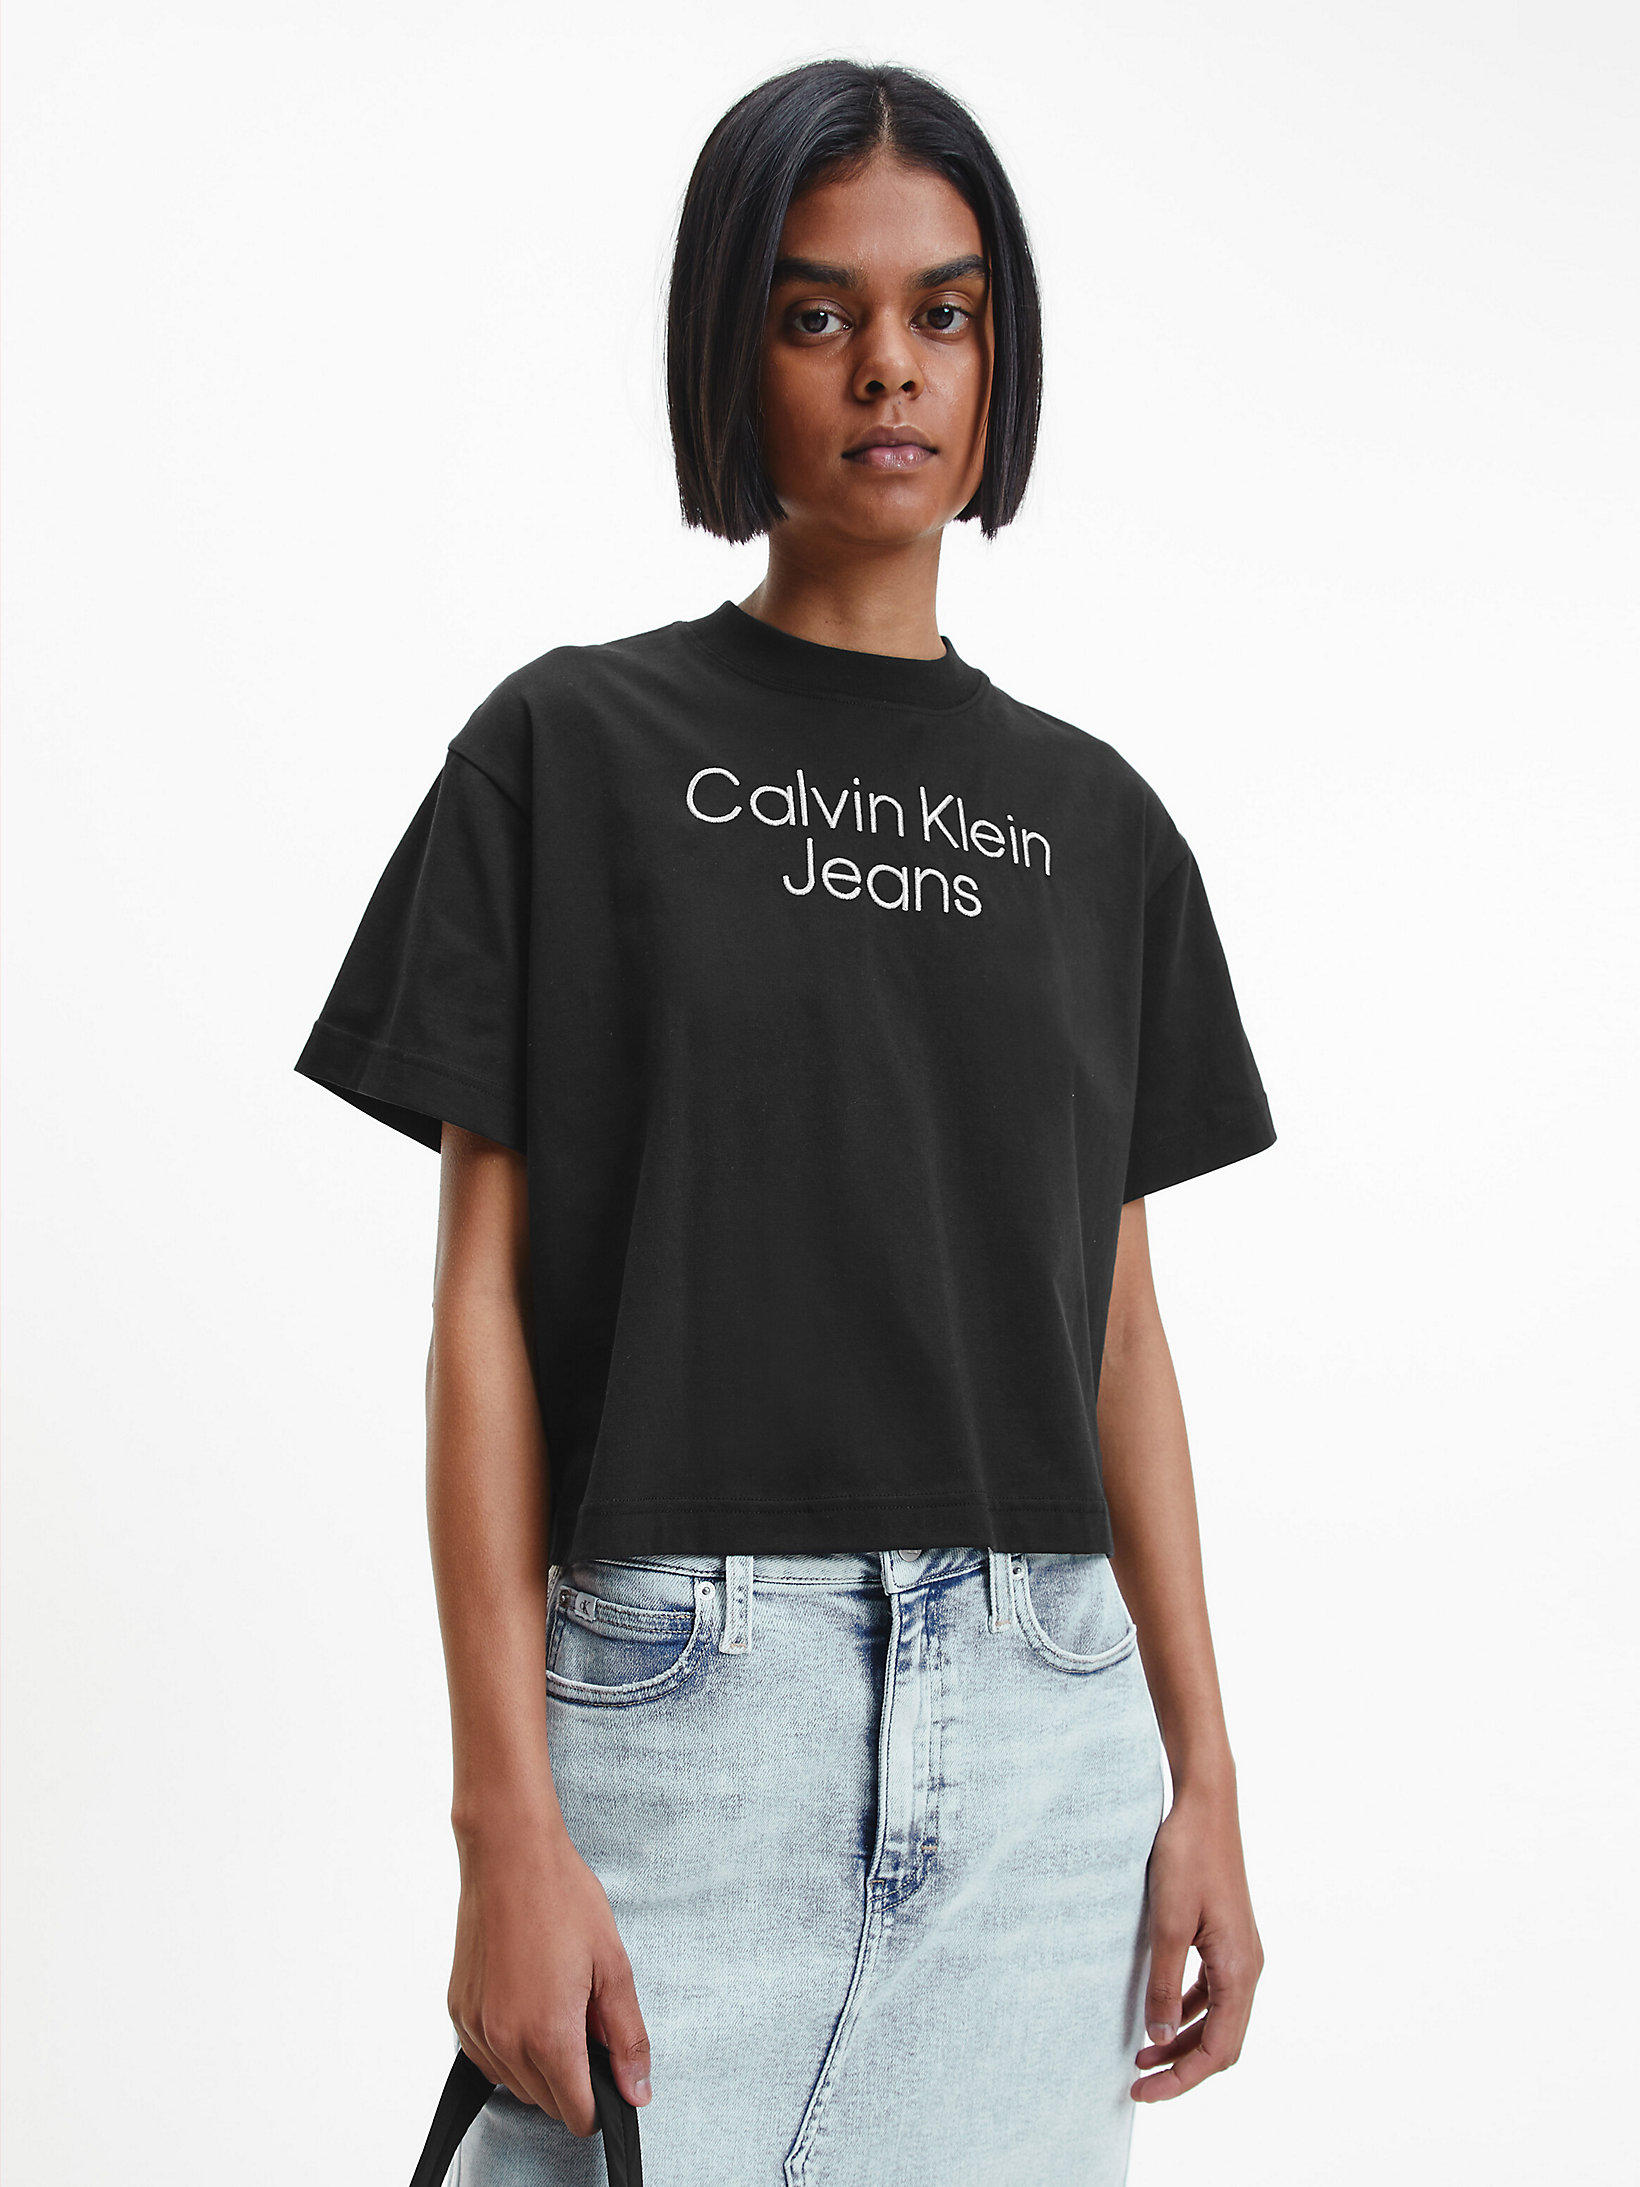 T-Shirt Con Logo Metallico Taglio Relaxed > CK Black > undefined donna > Calvin Klein